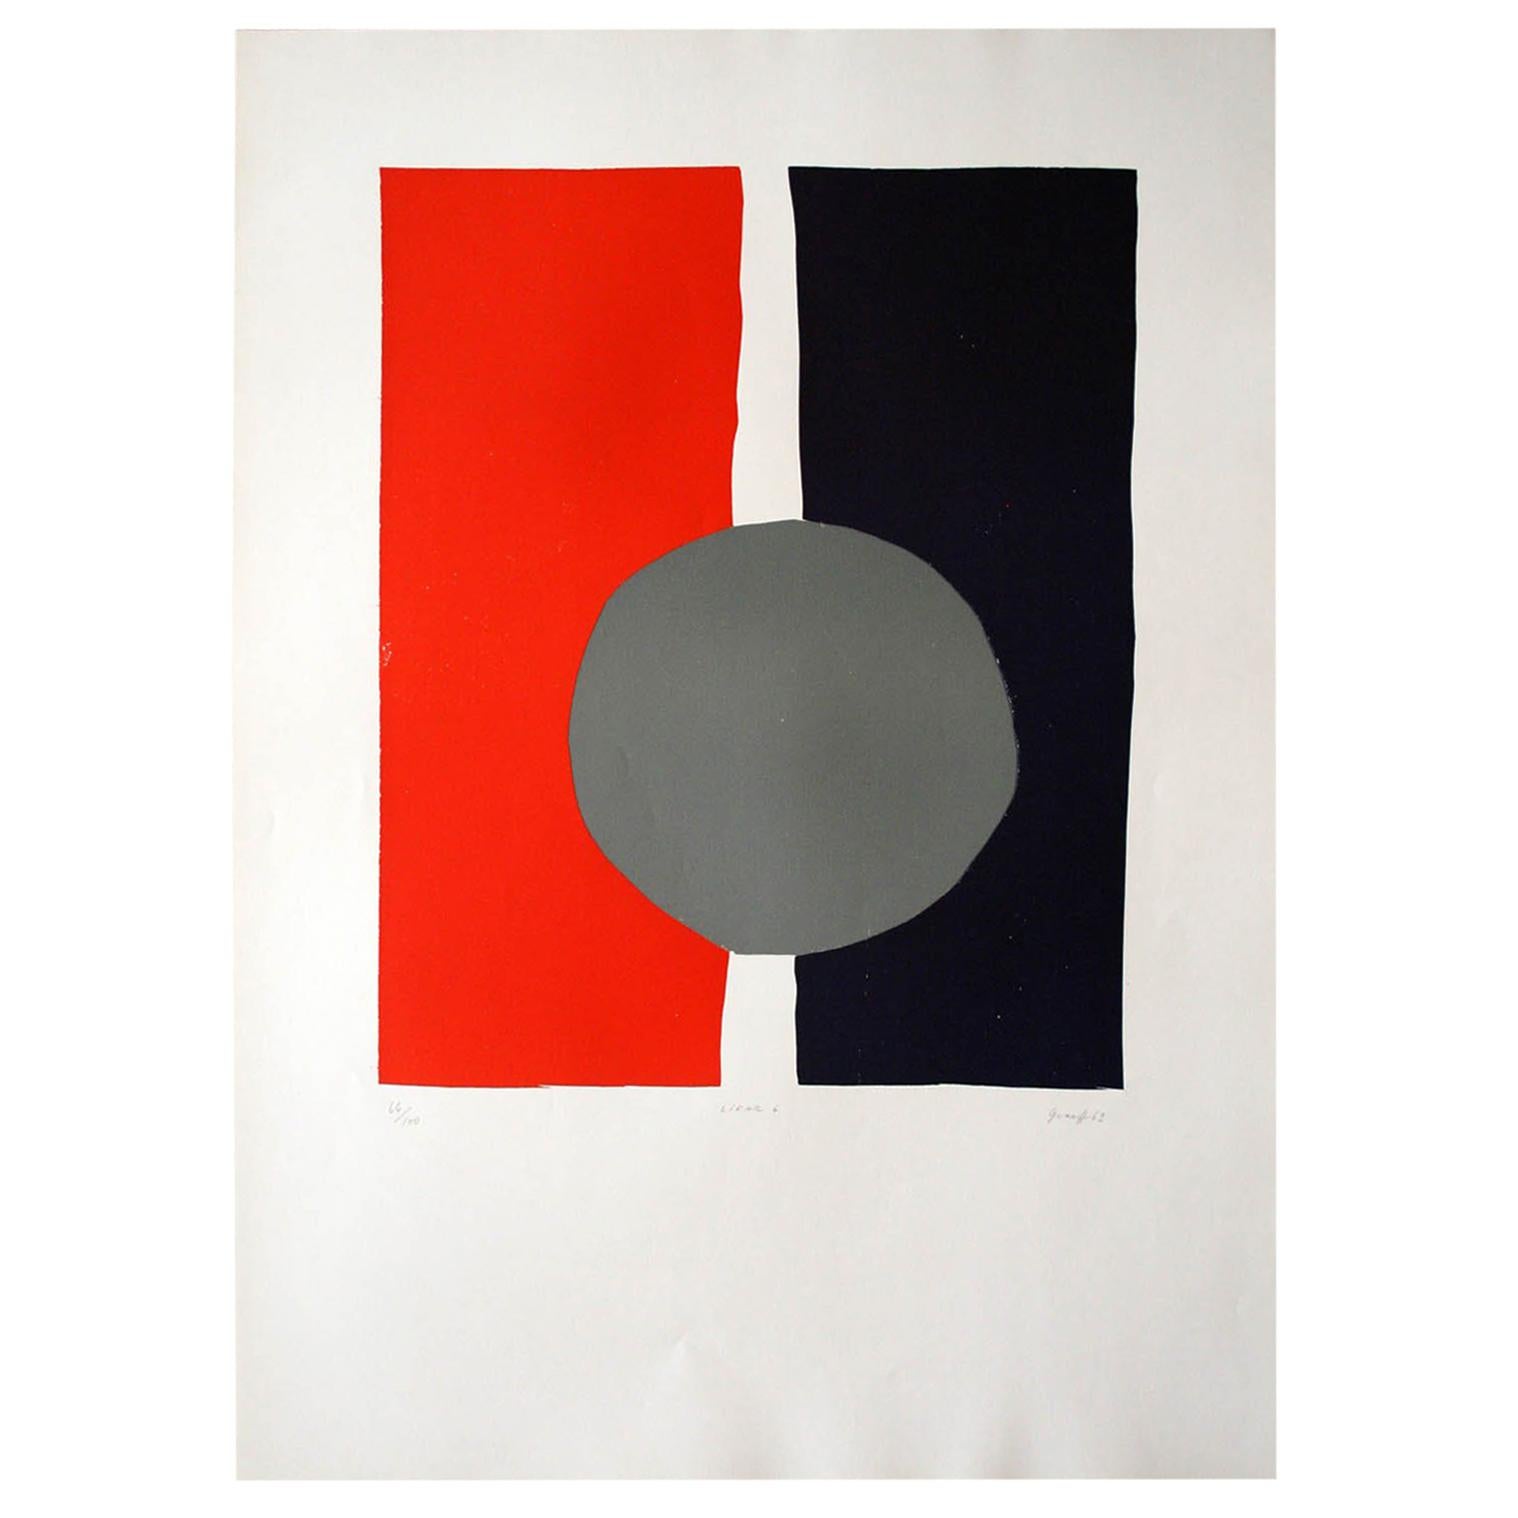 "Lifar 6" Original Bauhaus Artist Linocut Print, Signed Werner Graeff For Sale